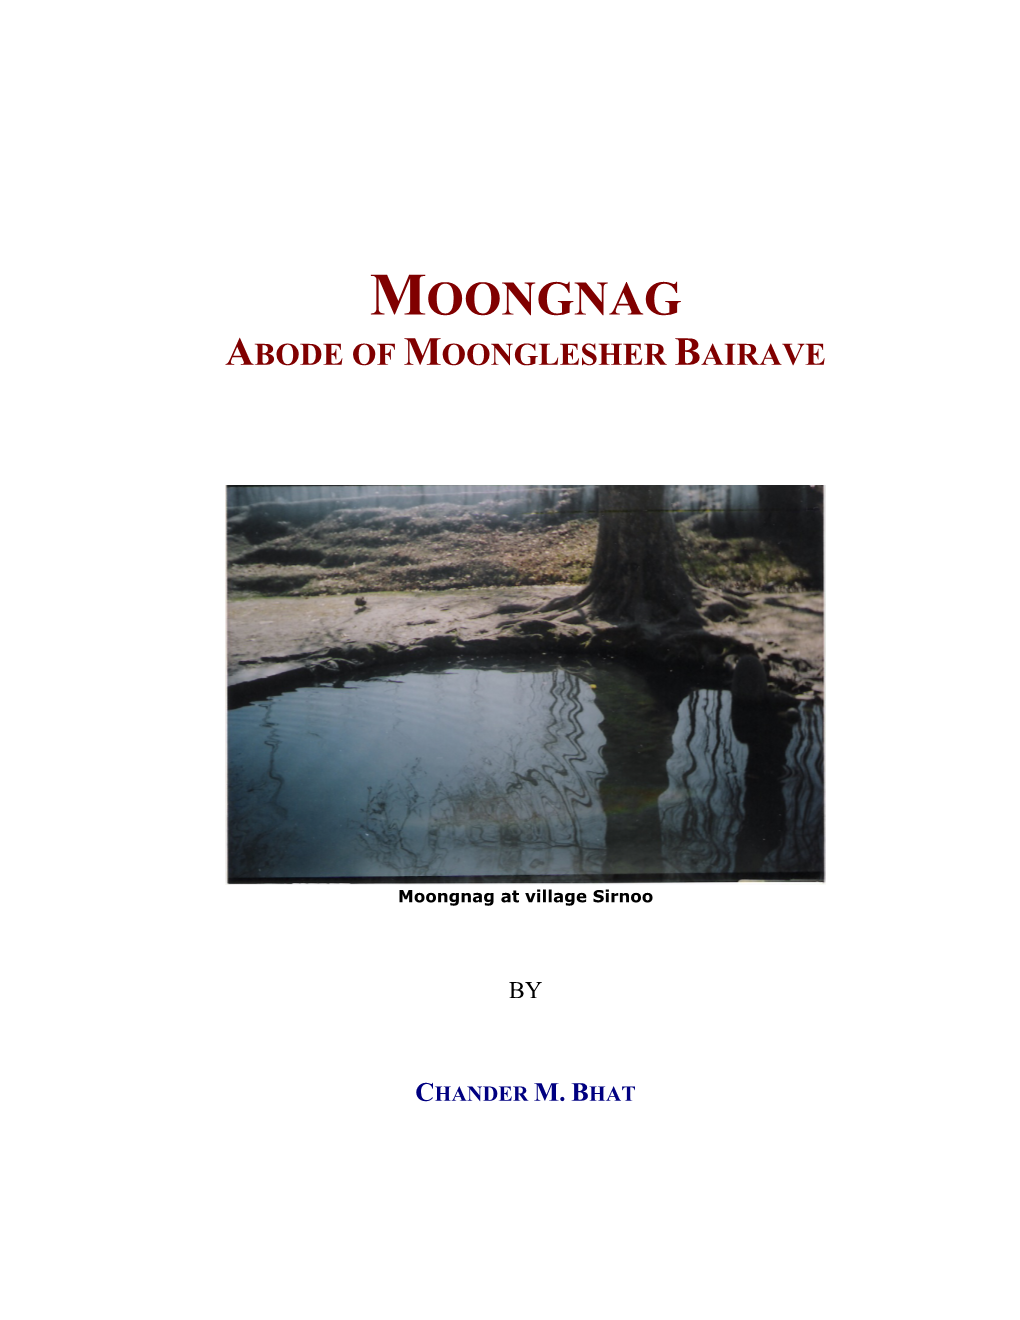 Moongnag Abode of Moonglesher Bairave